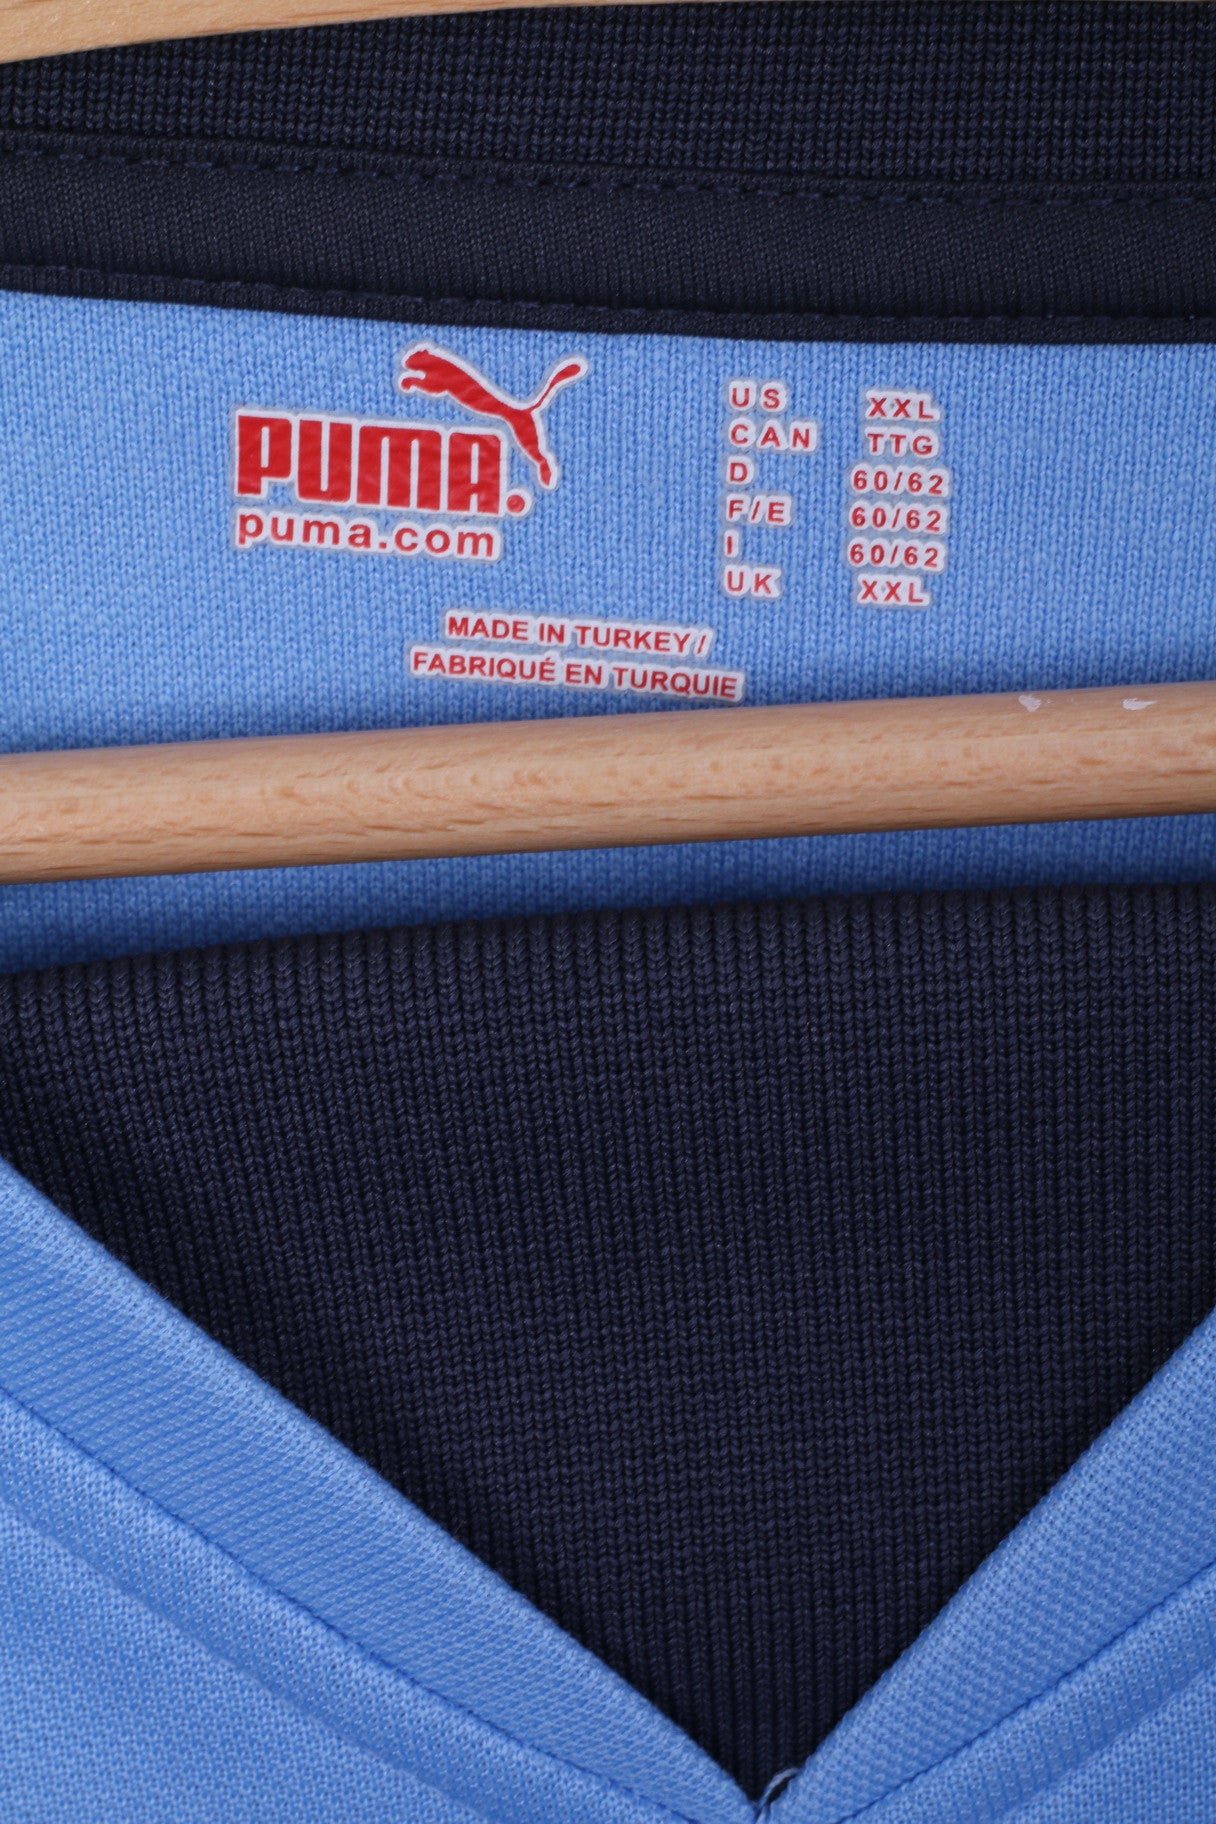 Puma Mens XXL Shirt Blue Crew Neck Sport Traning Rugby League Club St.Helens